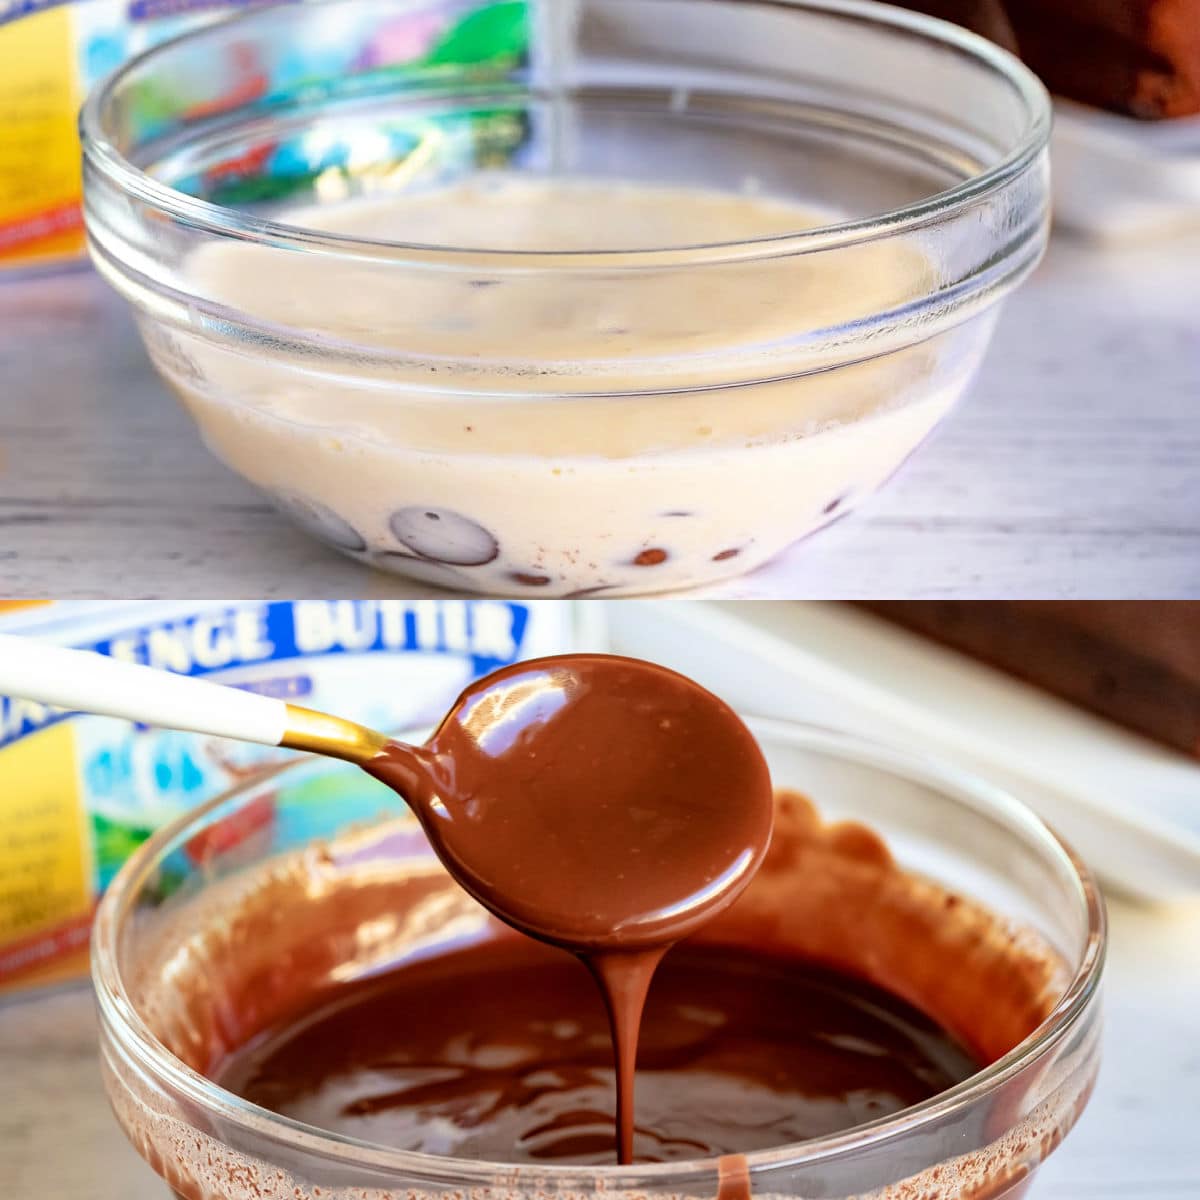 2 image collage showing chocolate ganache glaze being made